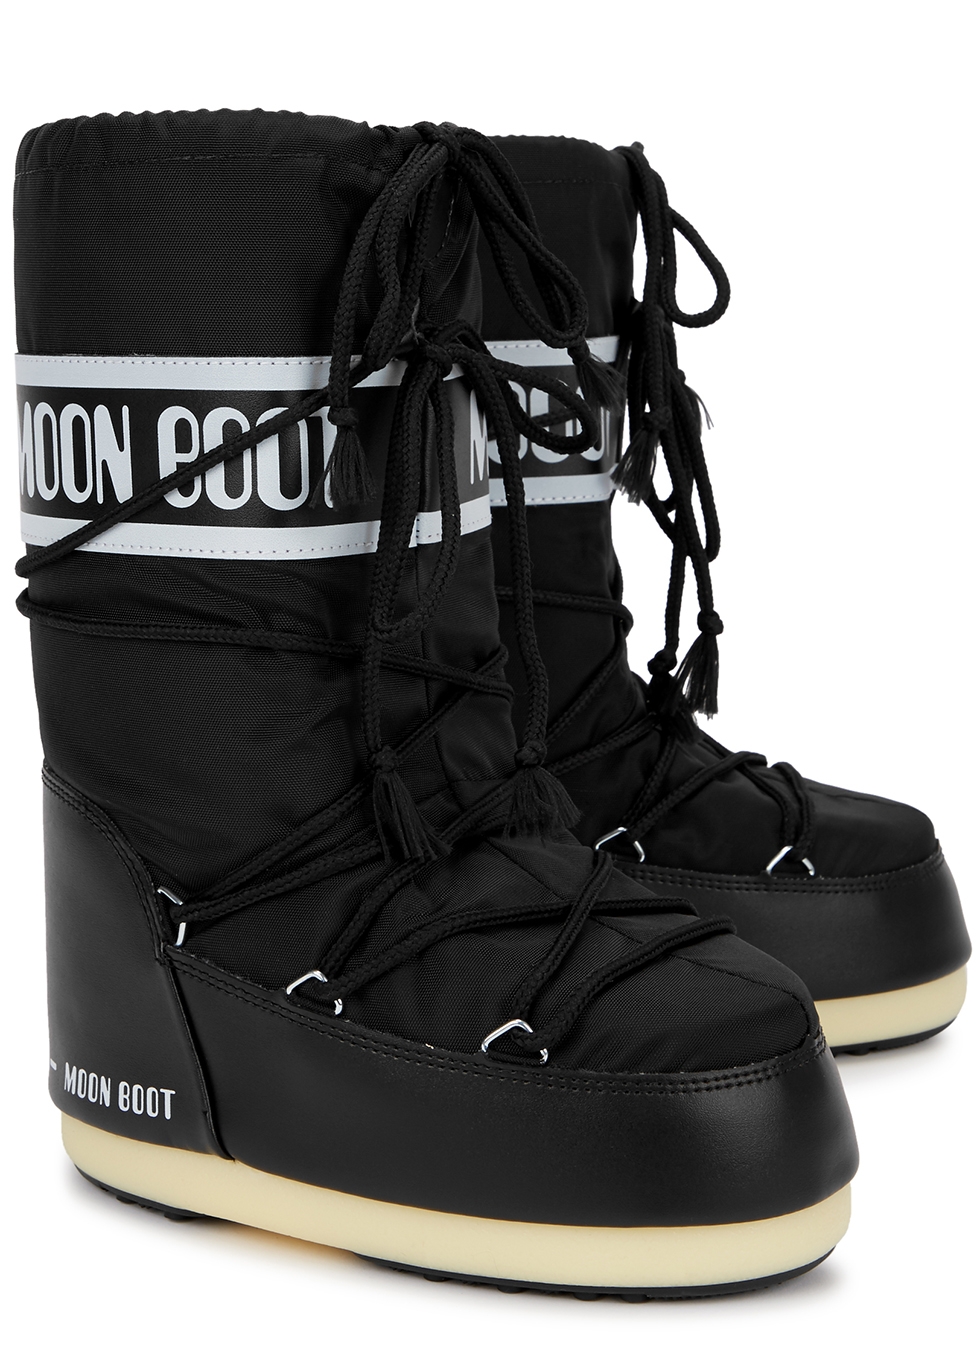 MOON BOOT KIDS Icon black logo nylon snow boots - Harvey Nichols